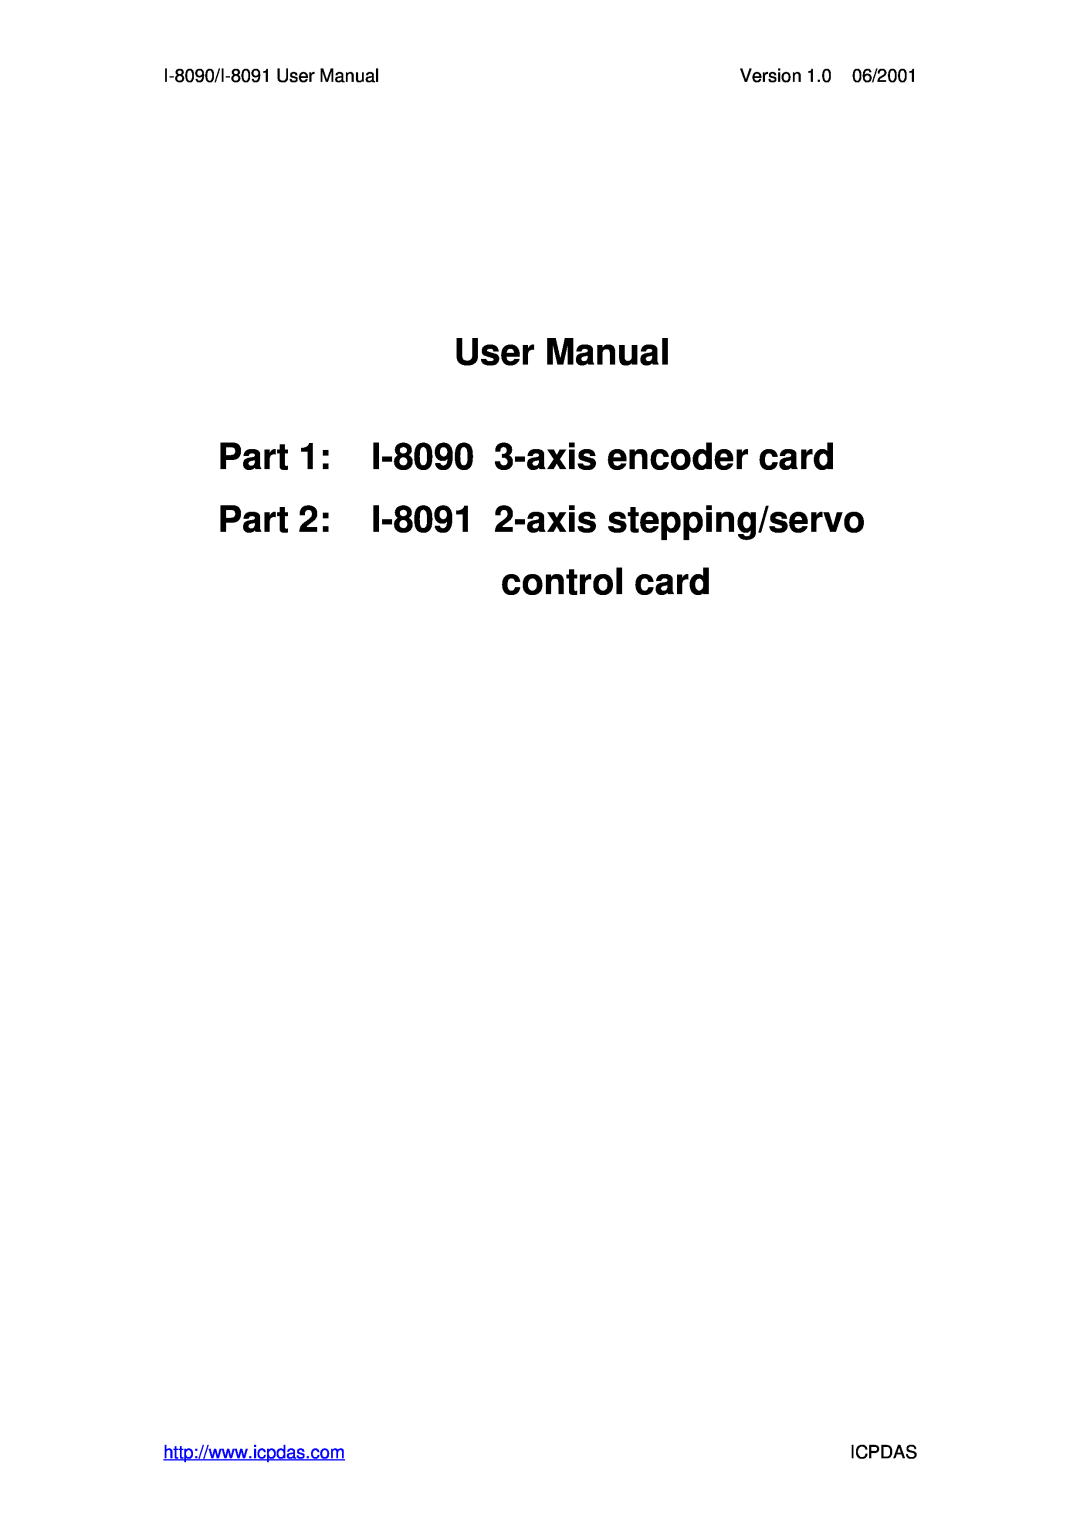 ICP DAS USA user manual User Manual Part 1 I-8090 3-axis encoder card, Part 2 I-8091 2-axis stepping/servo control card 